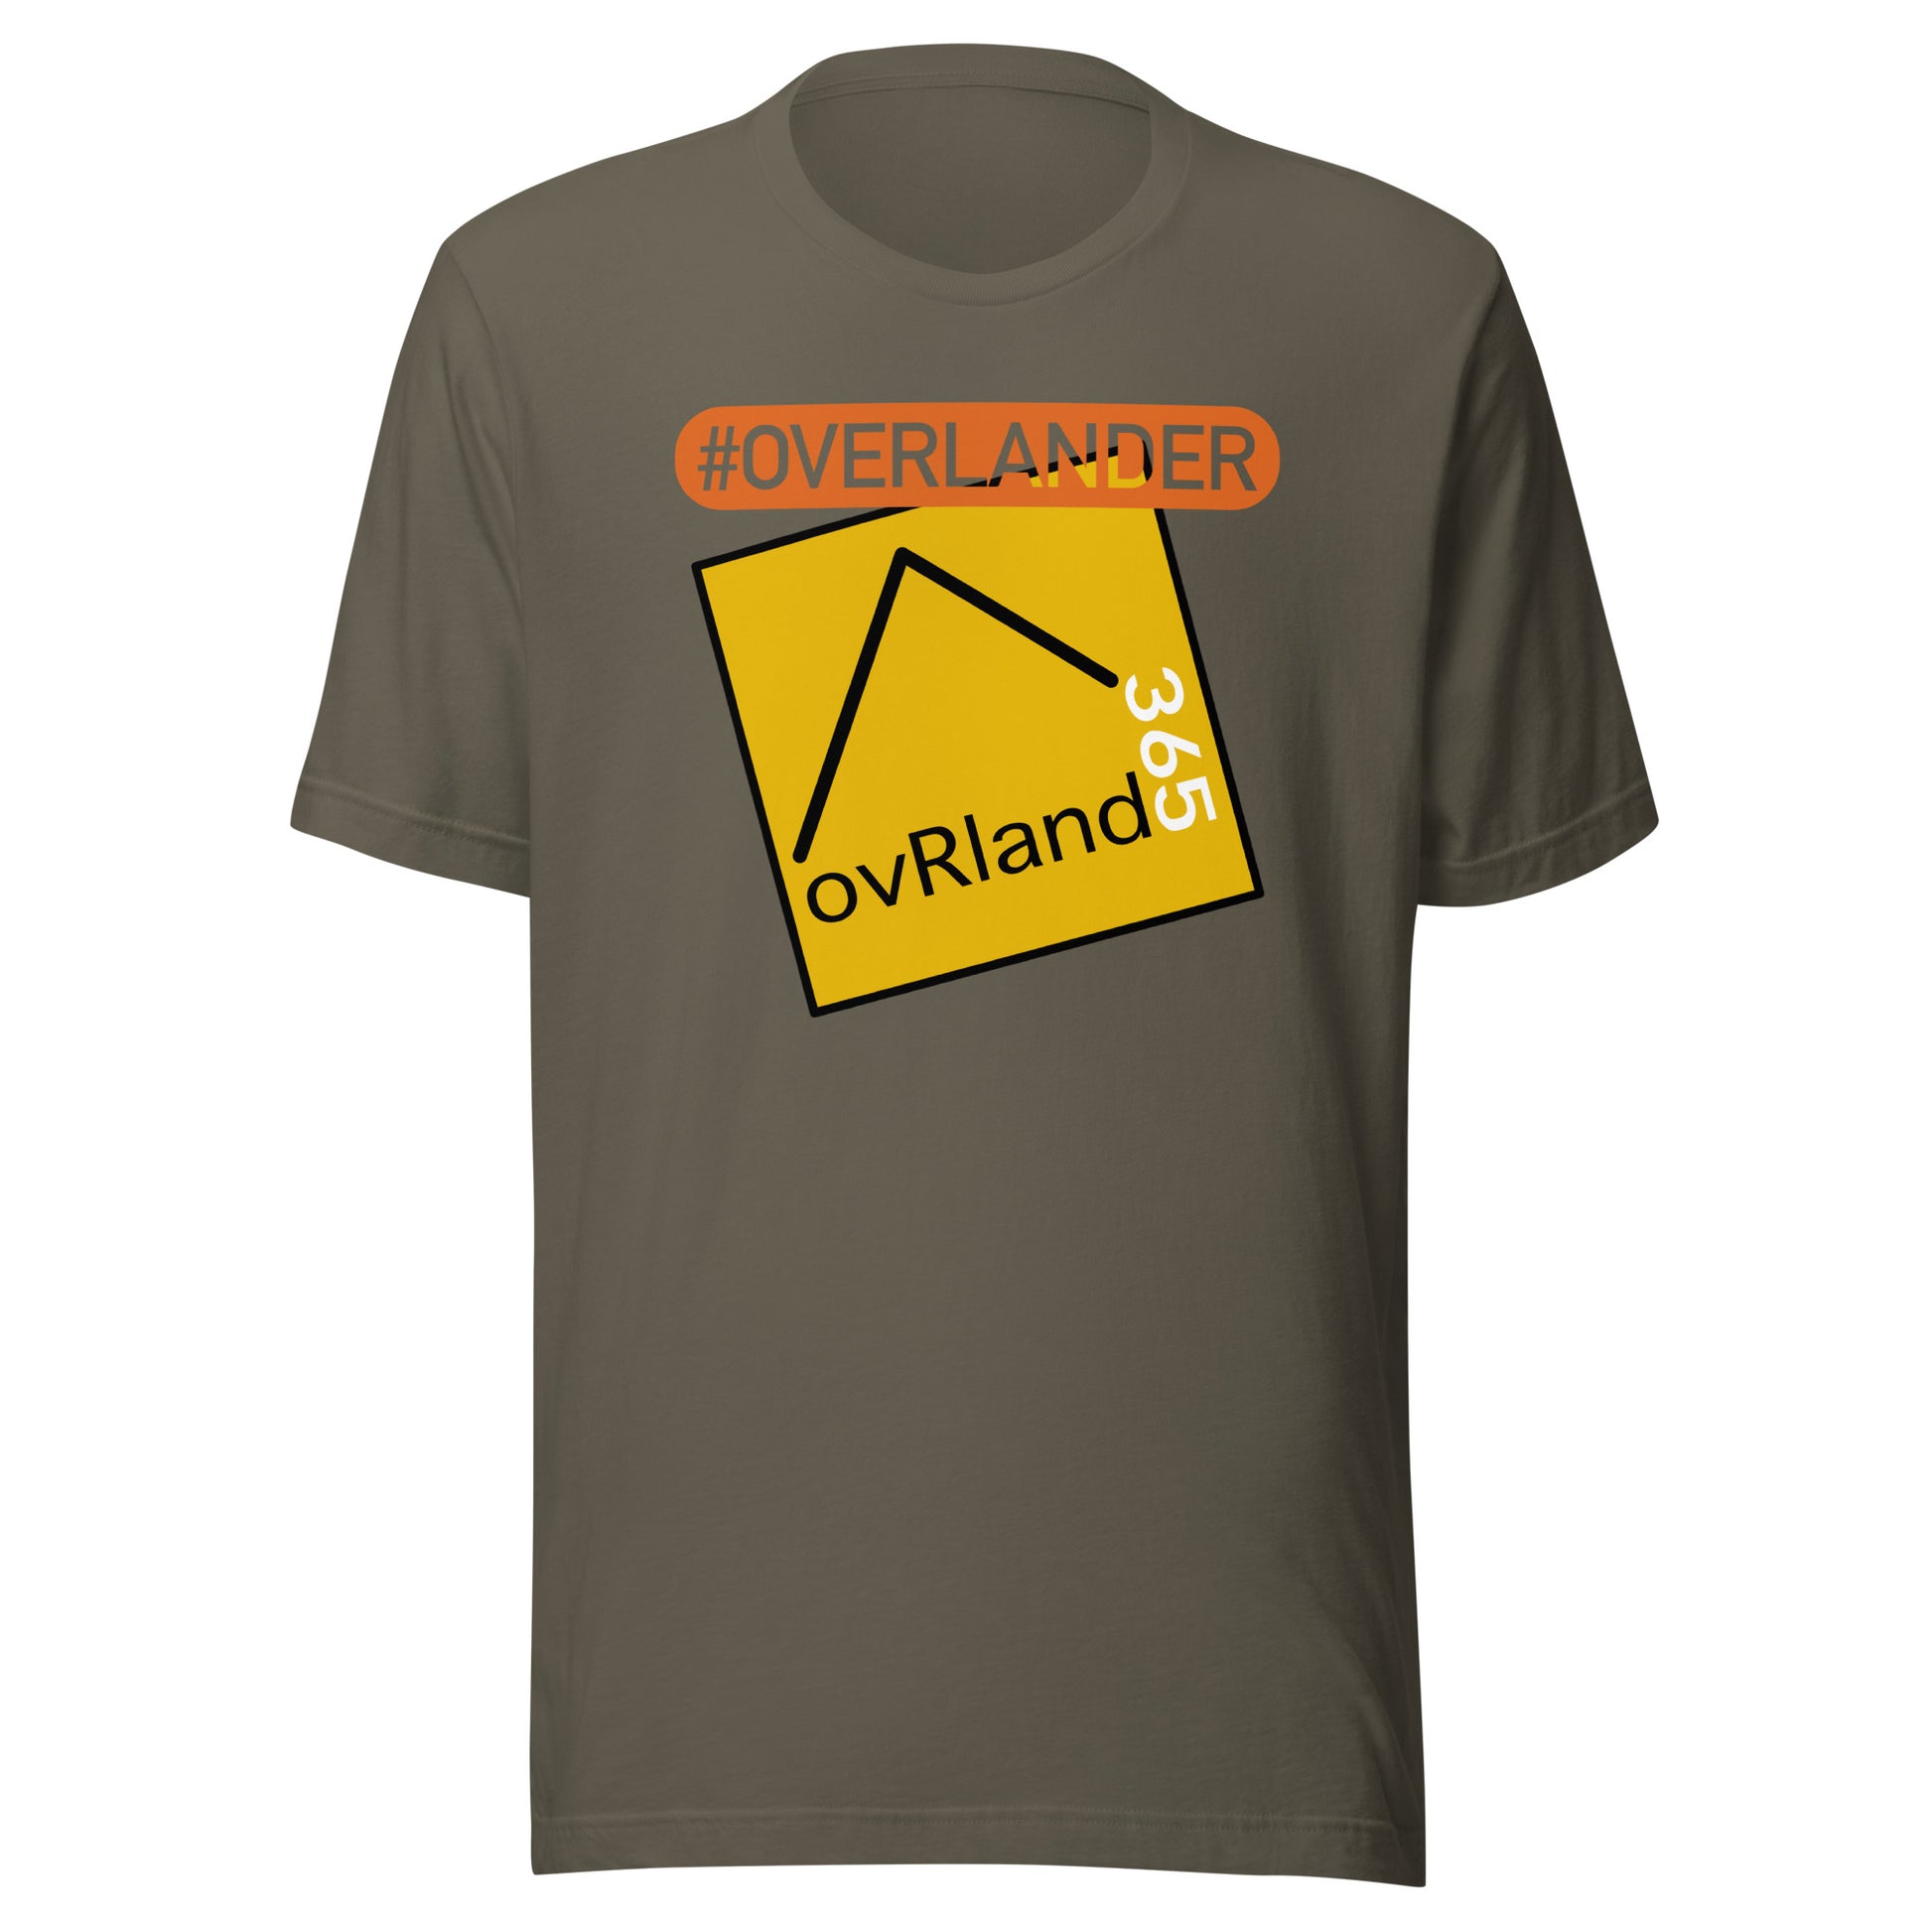 #overlander overlanding t-shirt, green. overland365.com